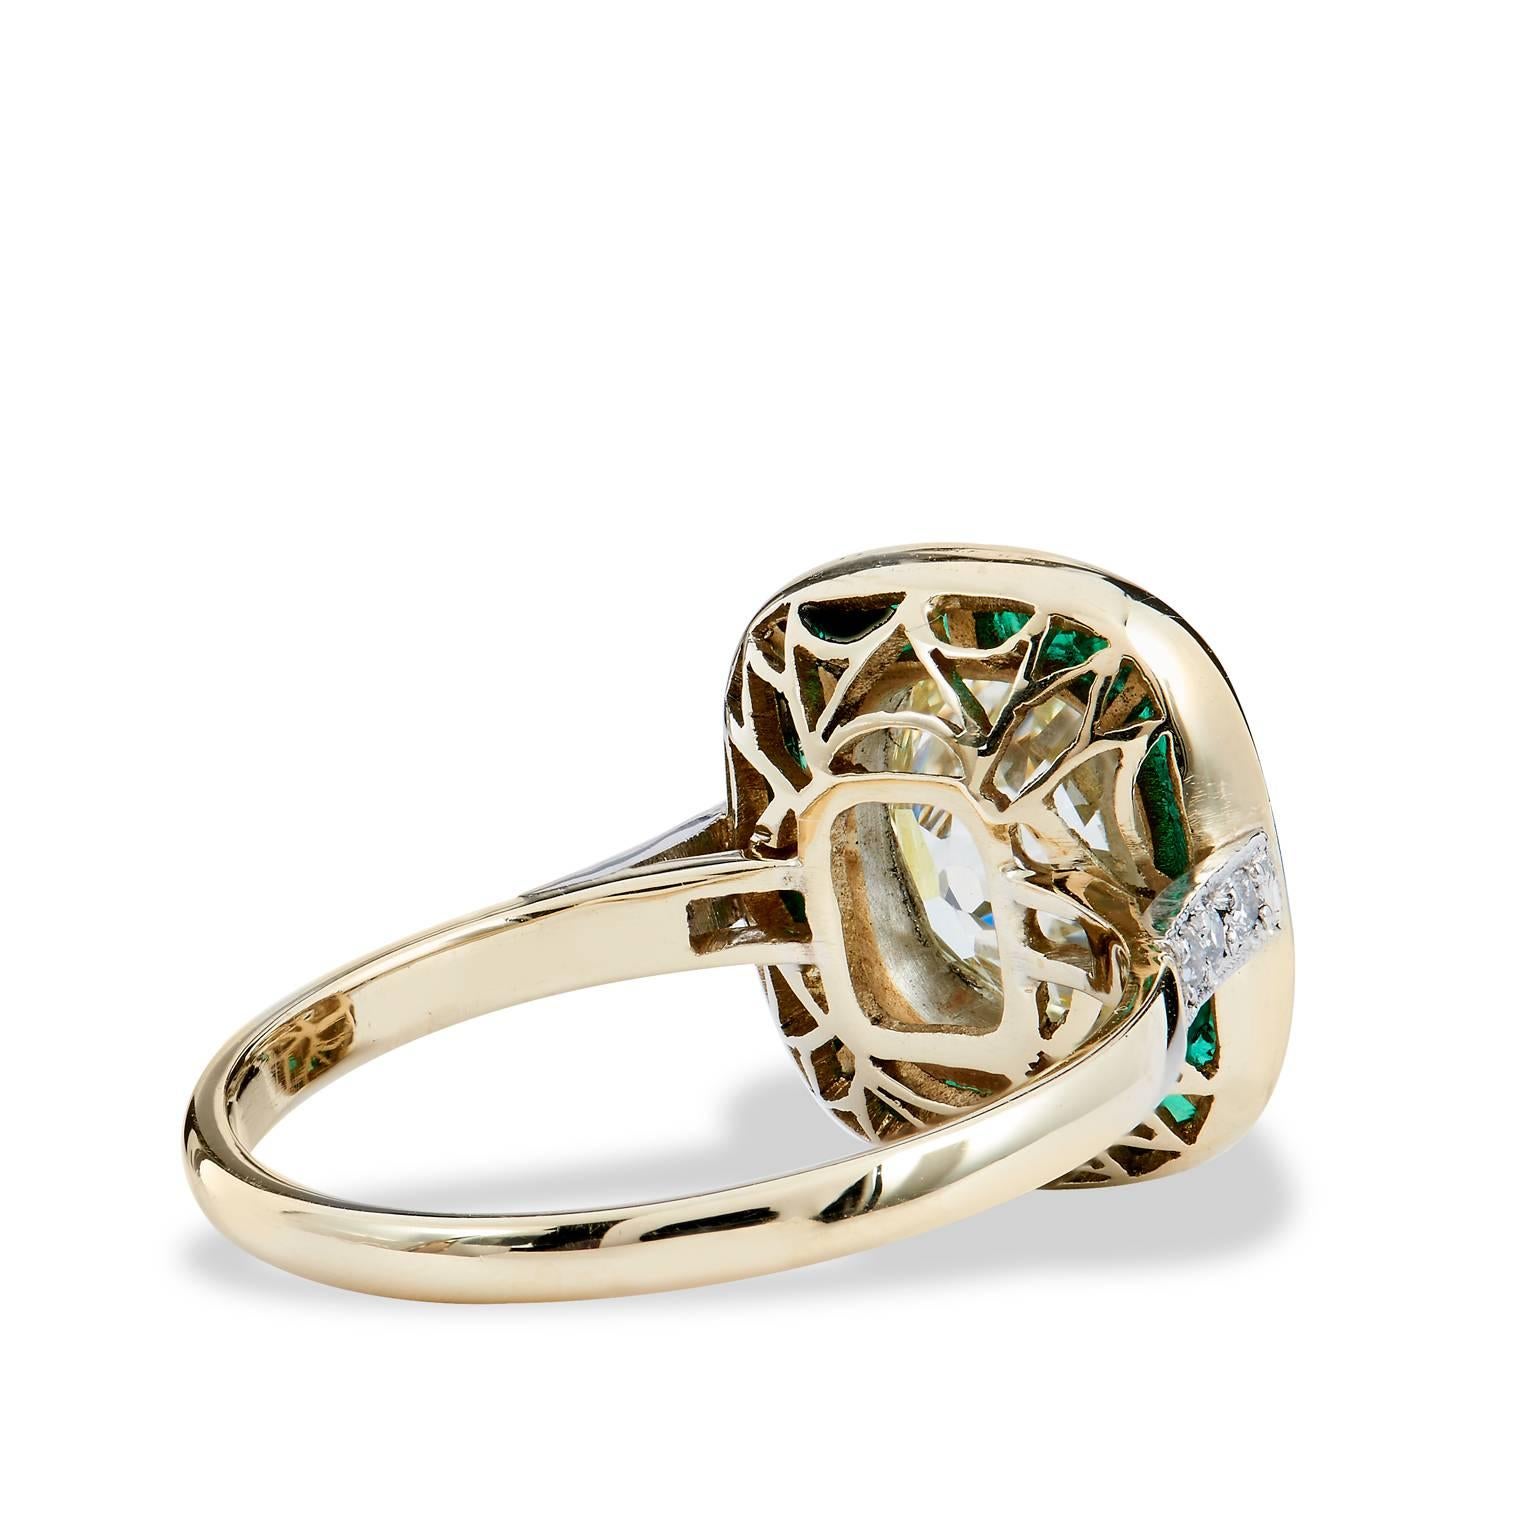 Women's  2.49 Carat Old Mine Cut Diamond and Emerald Ring